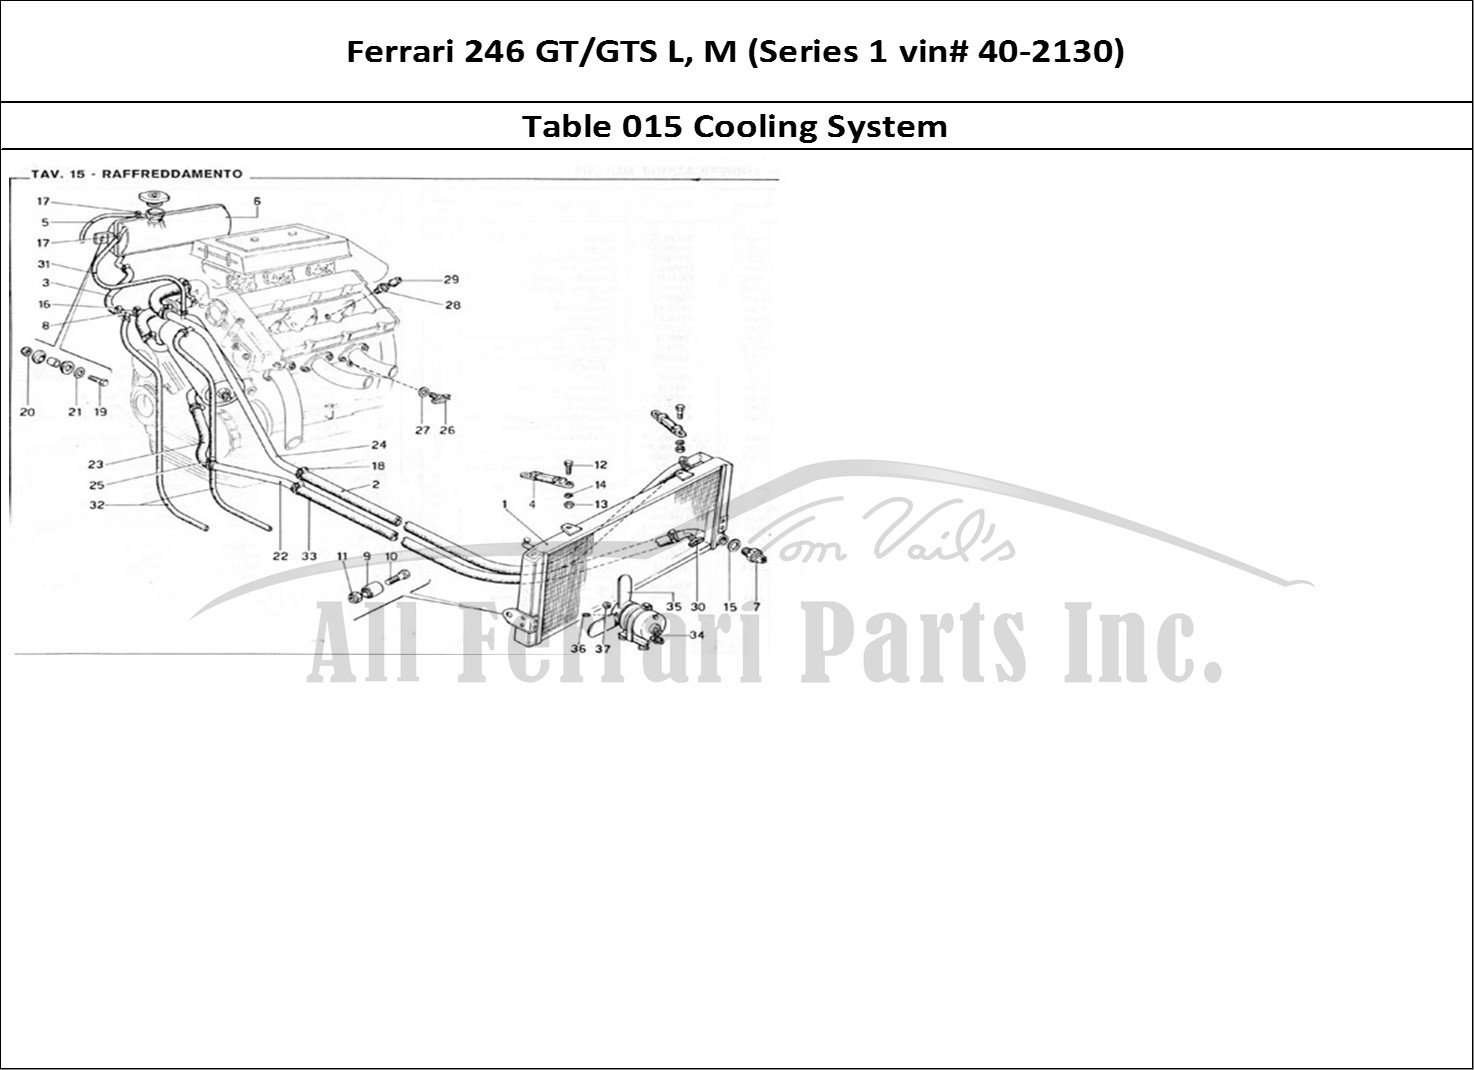 Ferrari Parts Ferrari 246 GT Series 1 Page 015 Cooling System